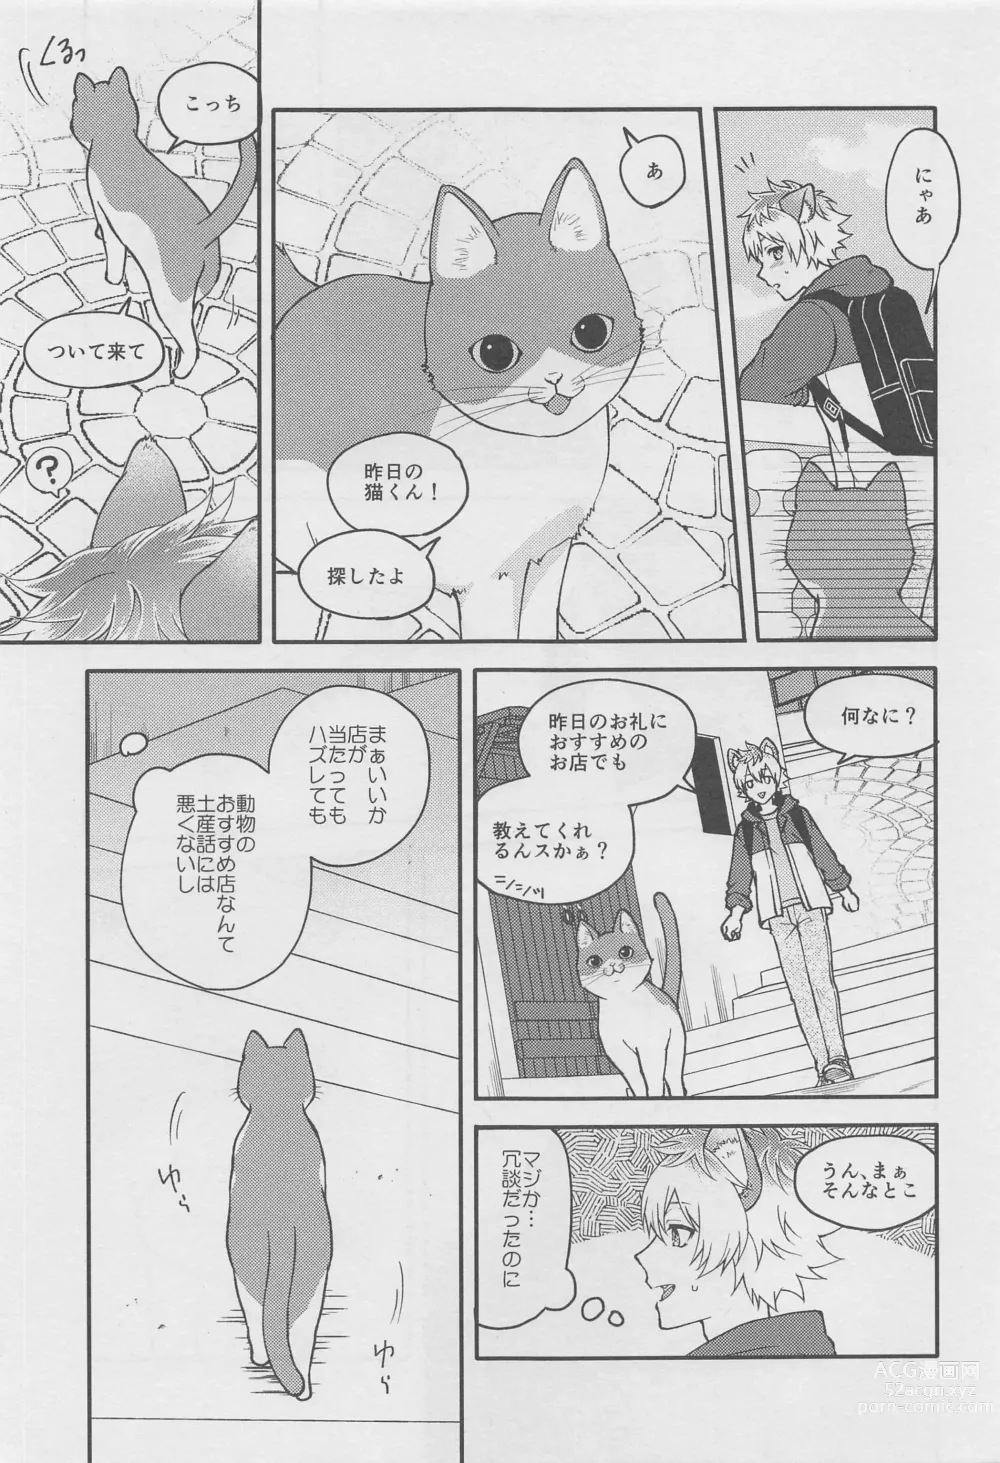 Page 22 of doujinshi Escape Trip